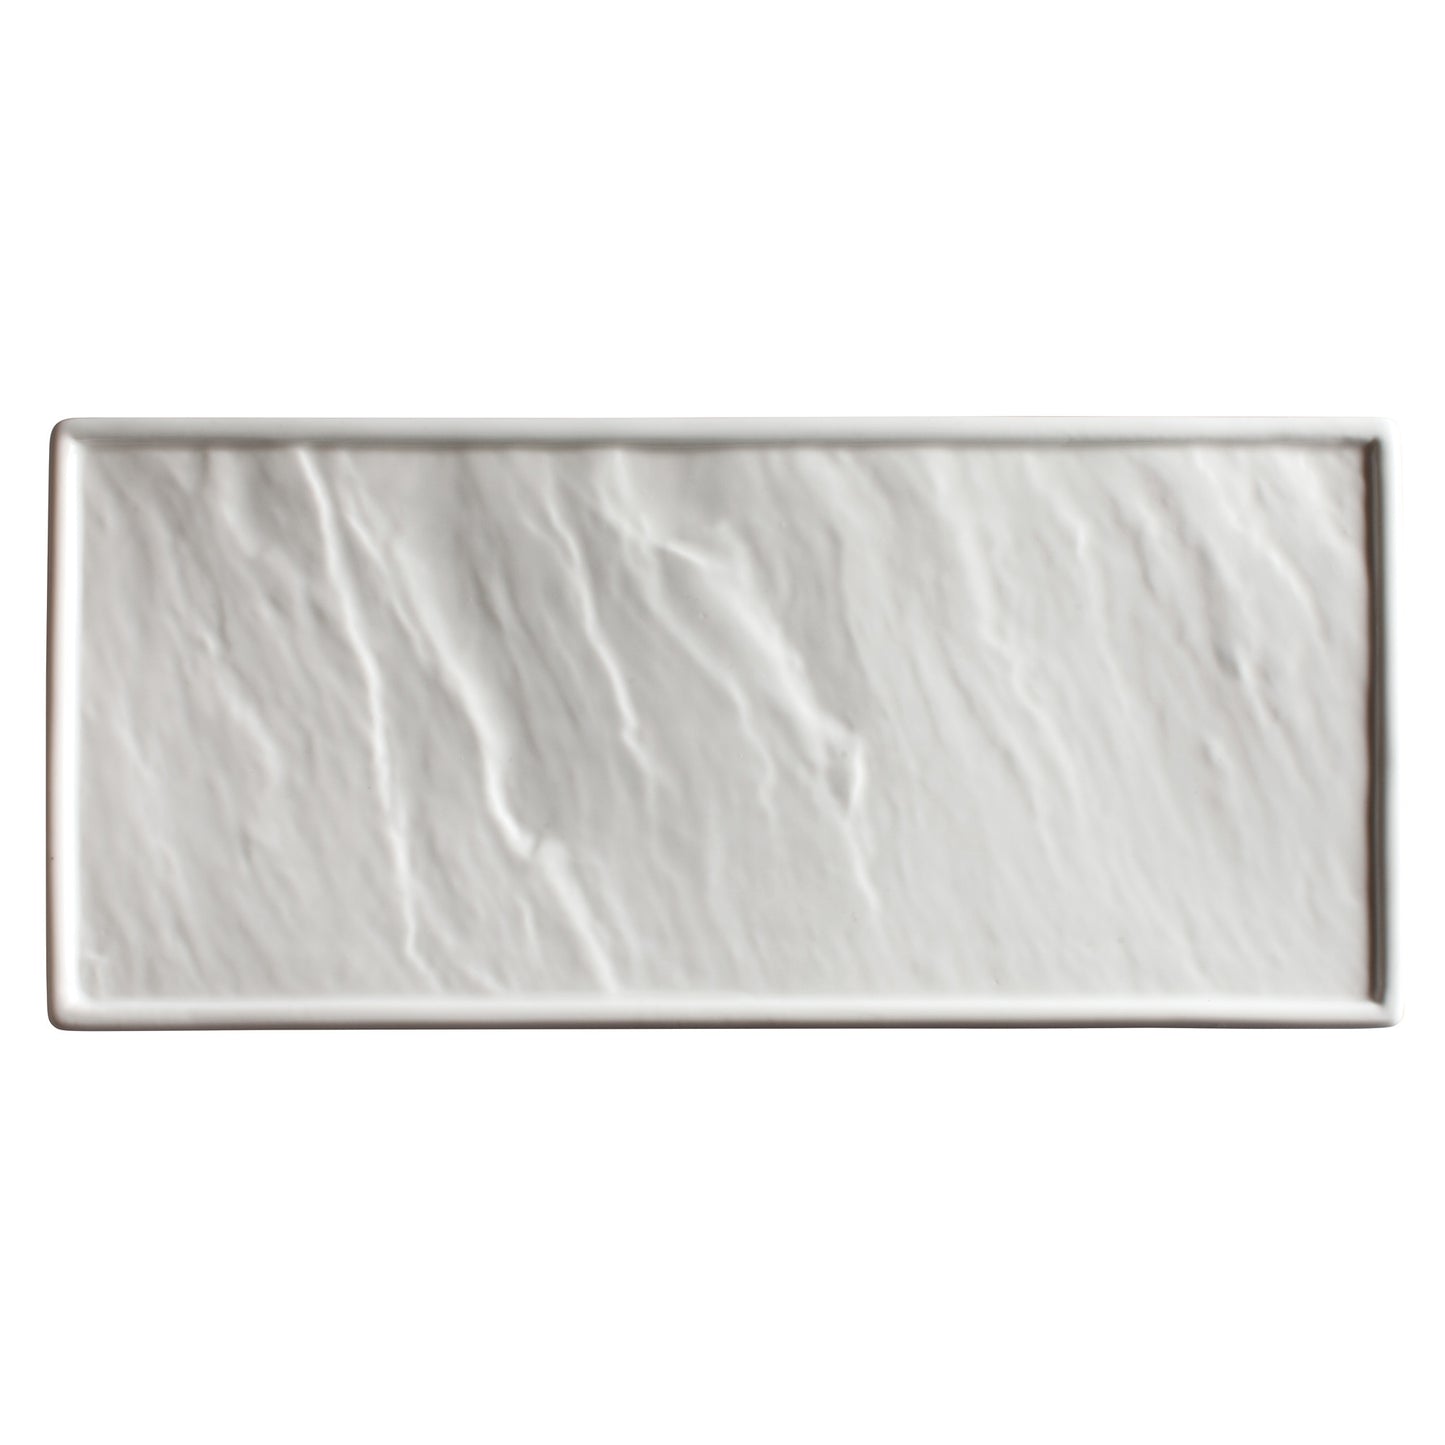 WDP001-201 - Calacatta Porcelain Rectangular Platter, Creamy White - 10"